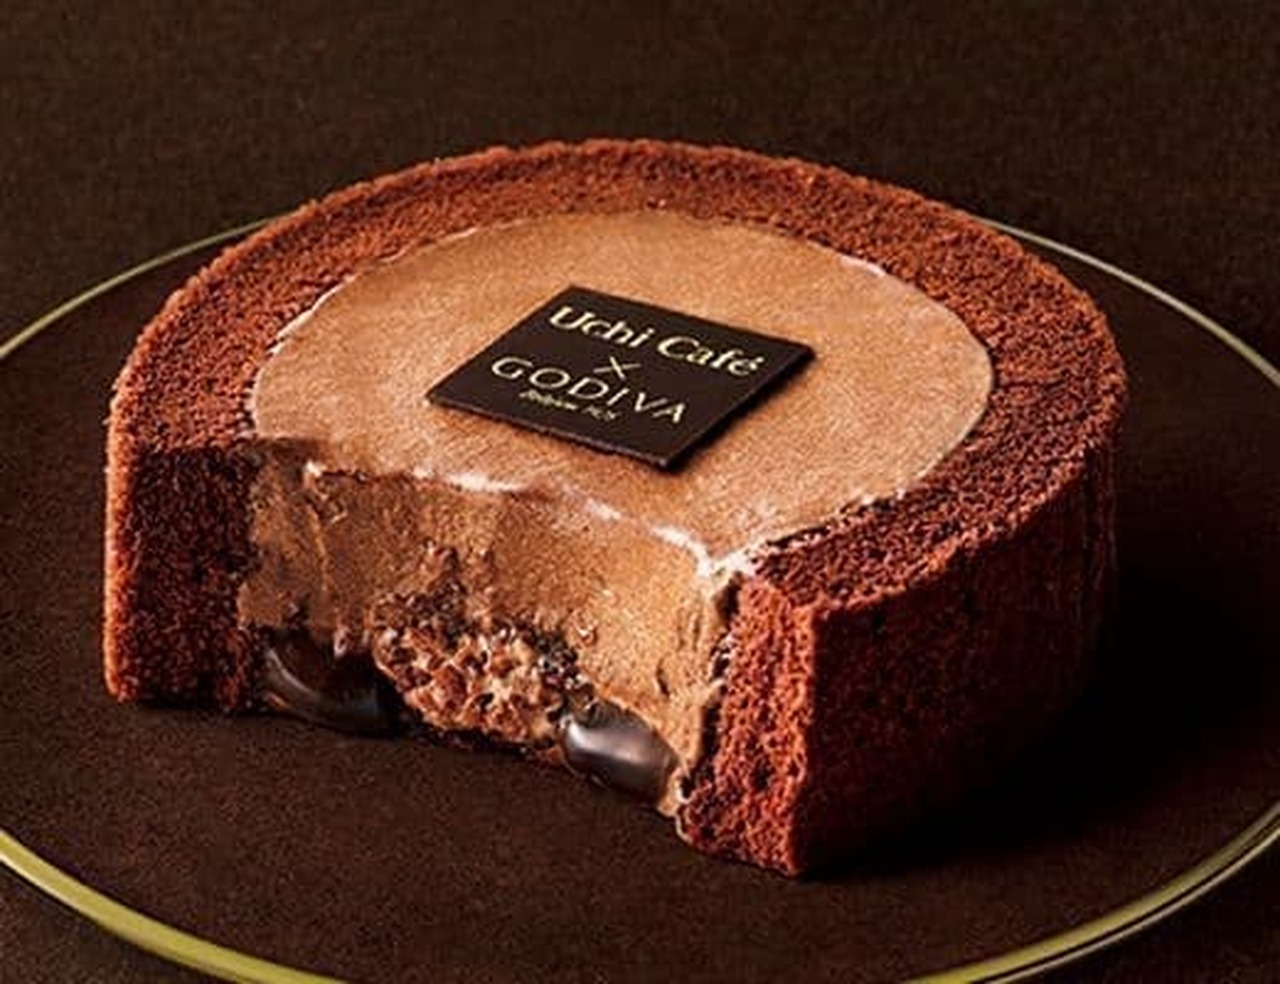 Lawson "Uchi Cafe x GODIVA Chocolat Roll Cake"